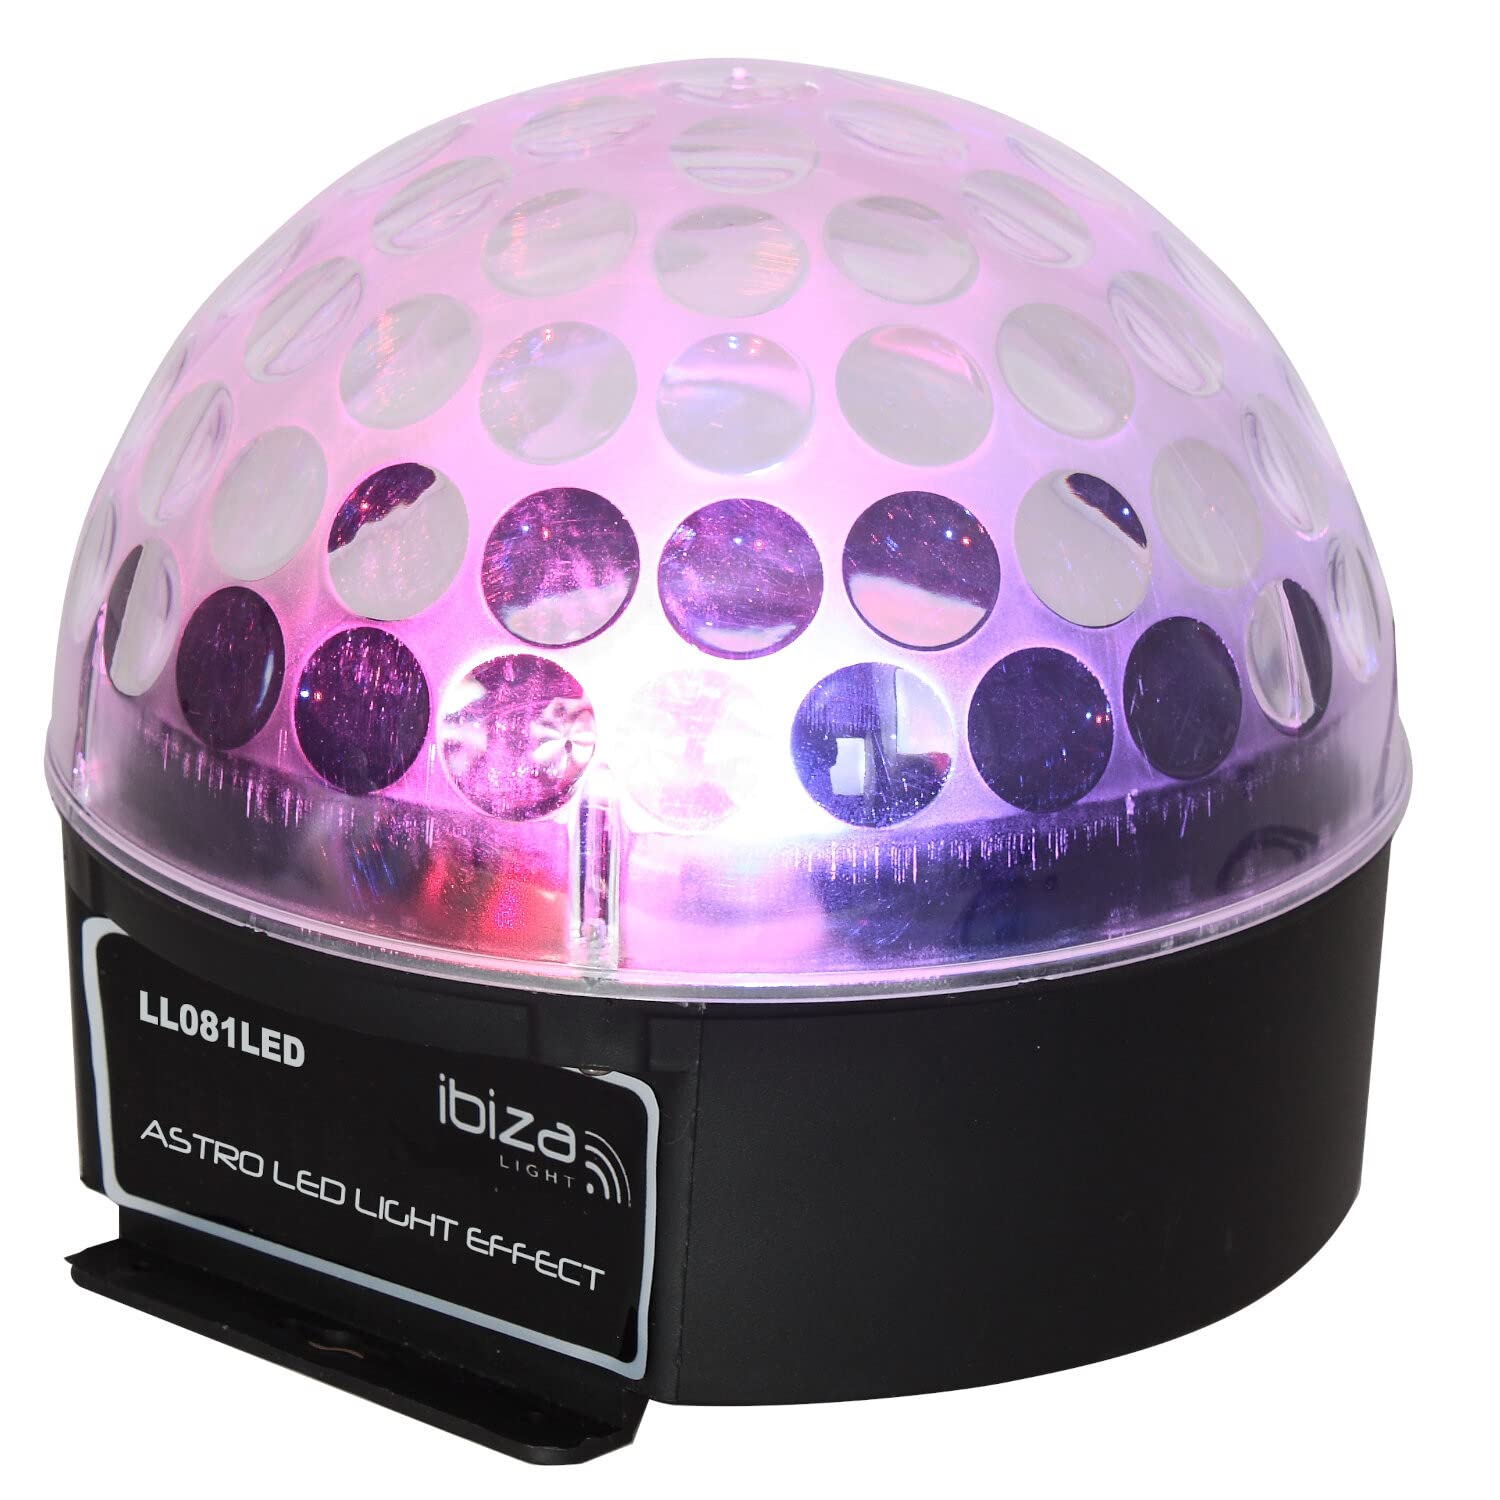 Ibiza 15-1360 RGB LED Licht Effekt Astro 1